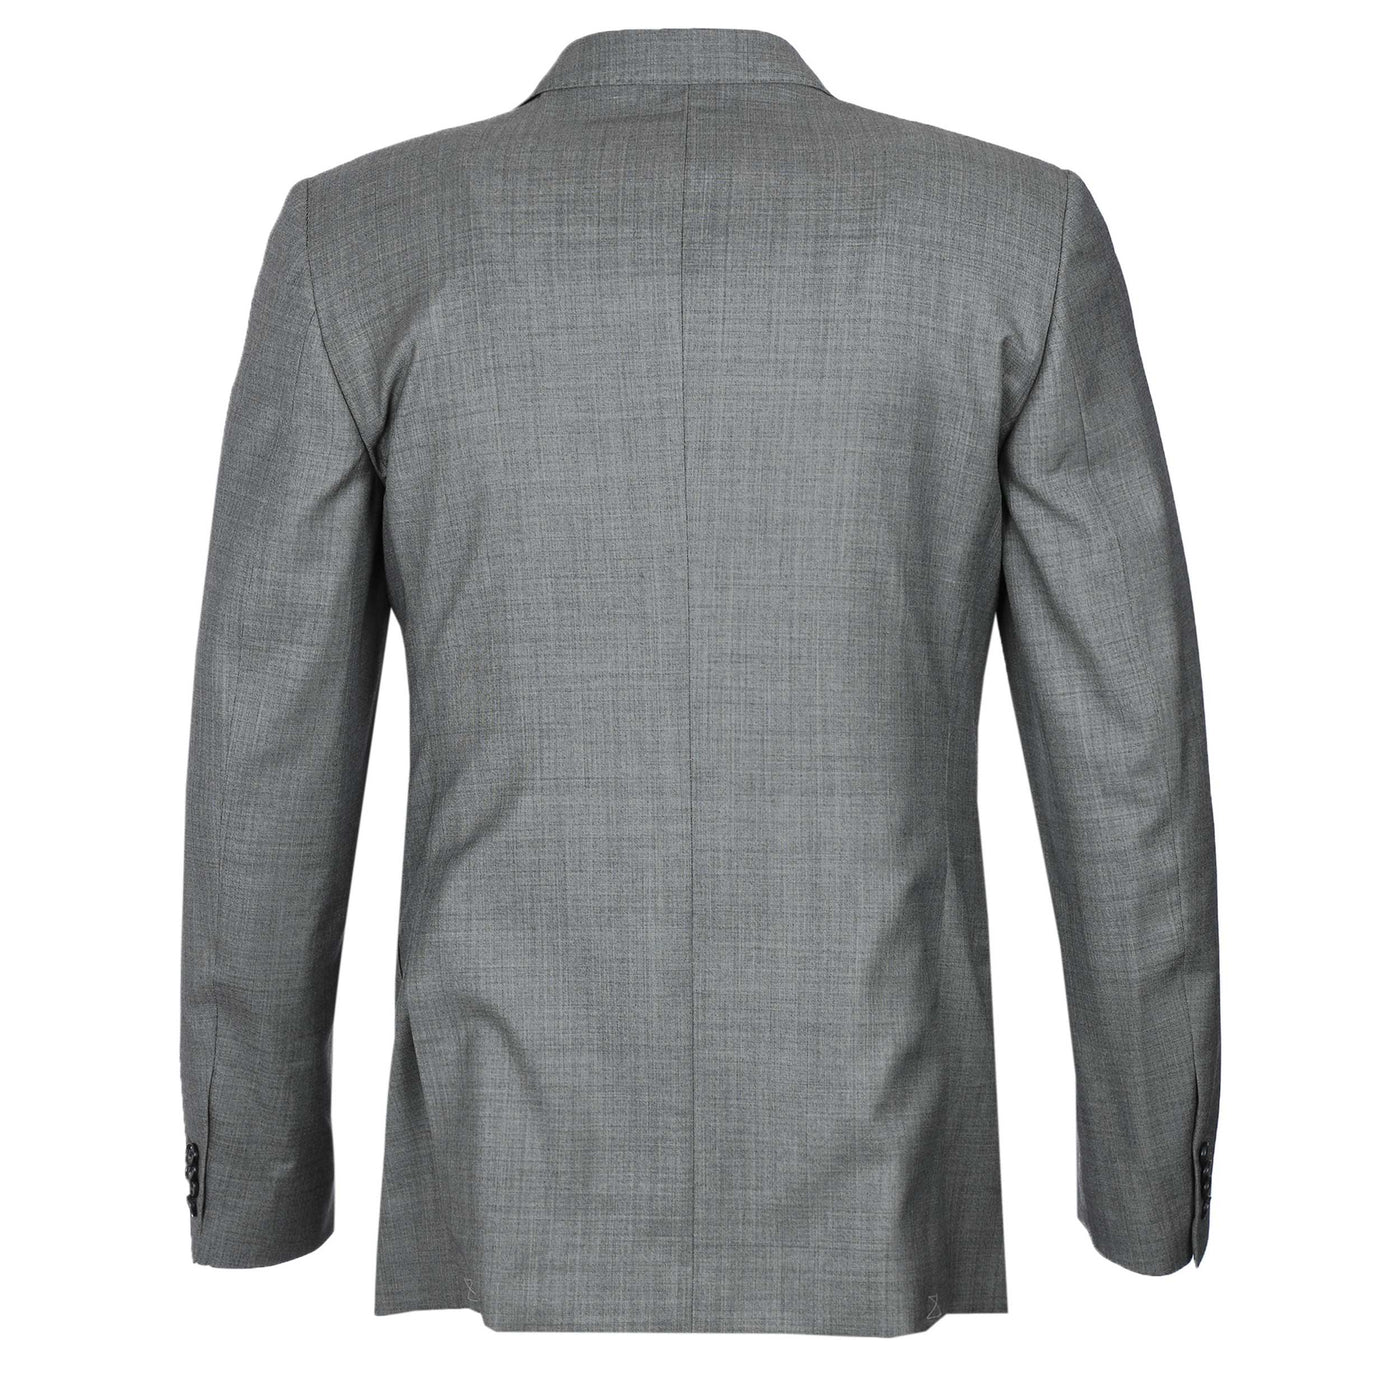 Norton Barrie Bespoke Paris 3 Piece Suit in Grey Back